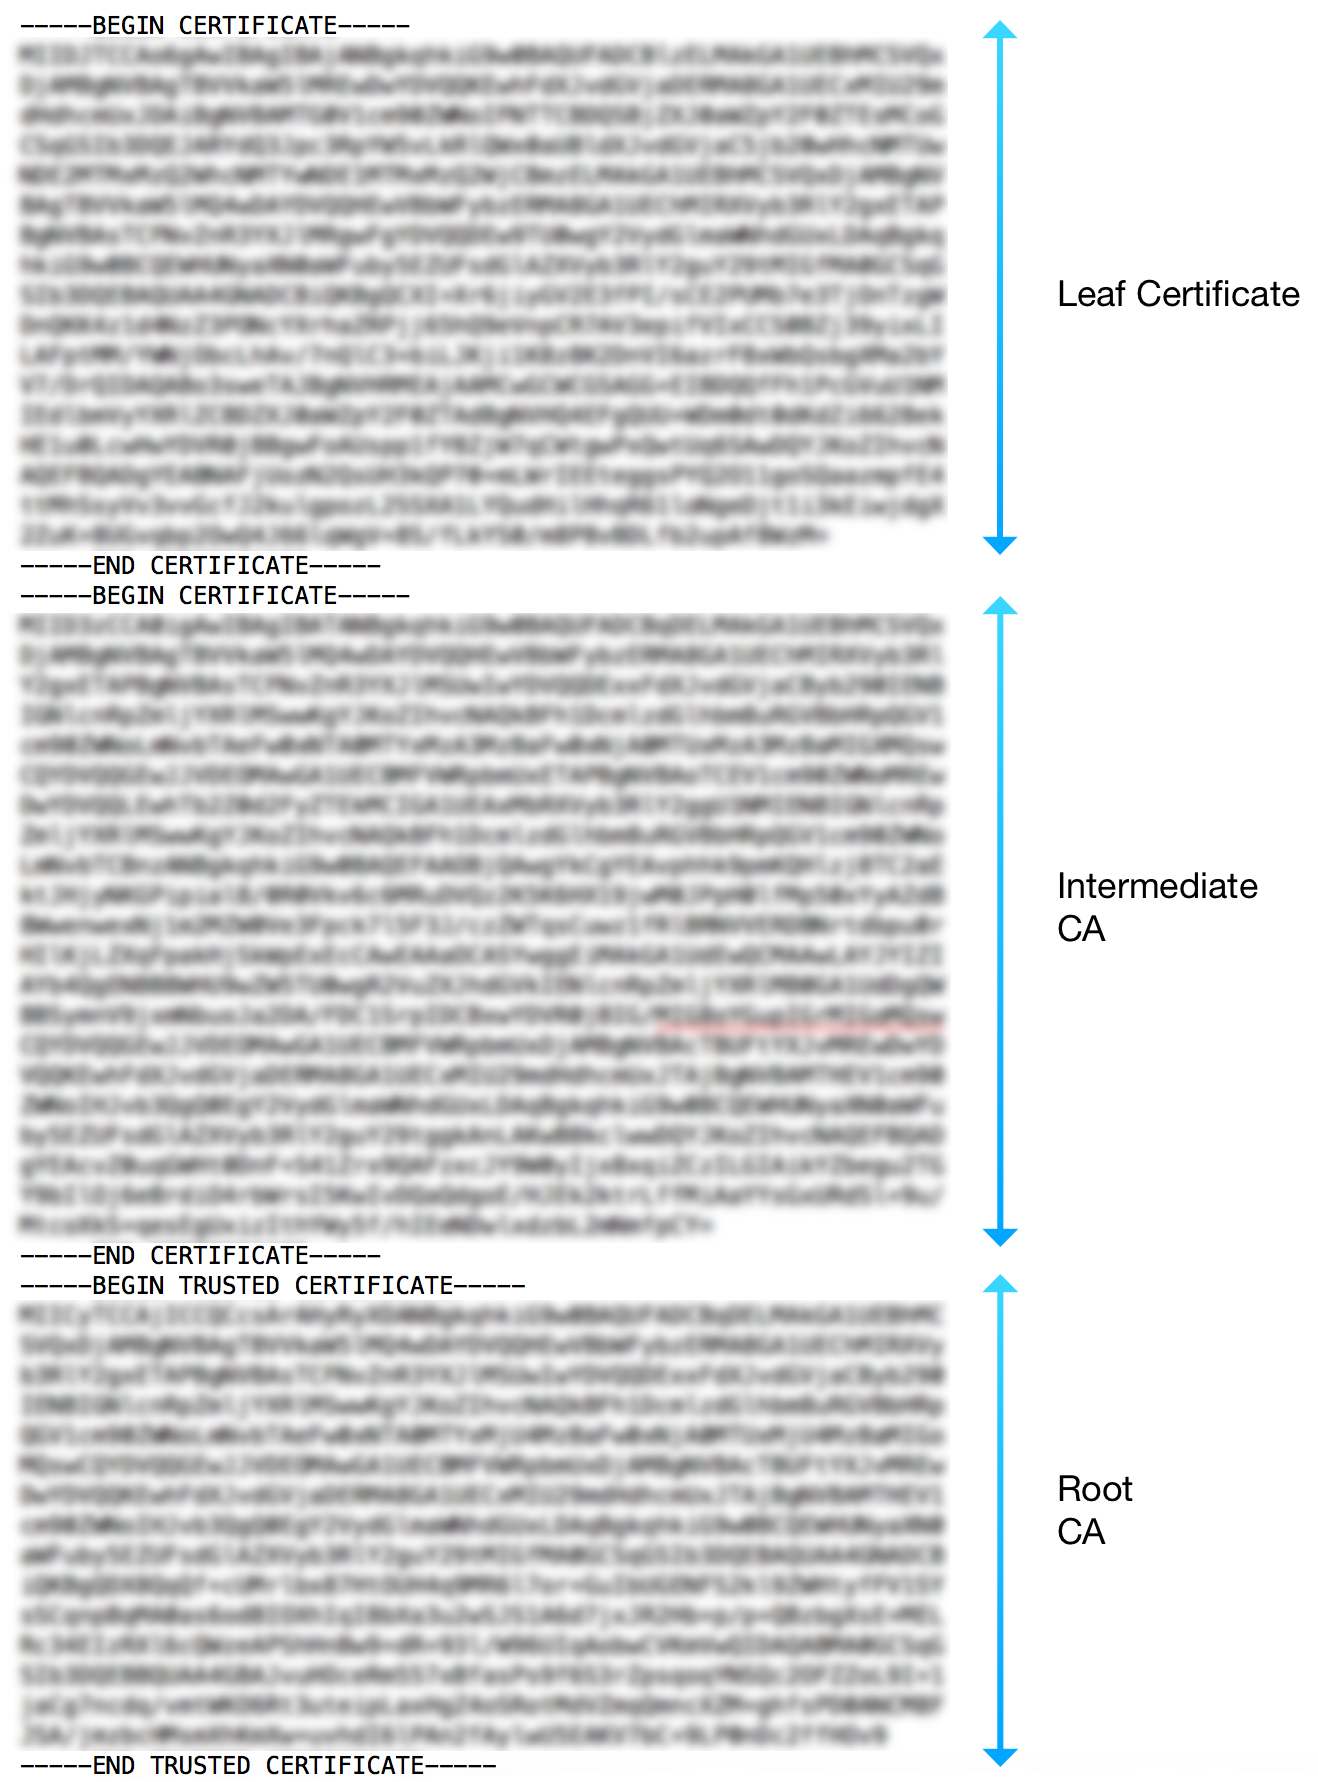 SSL Configuration Certificate Example